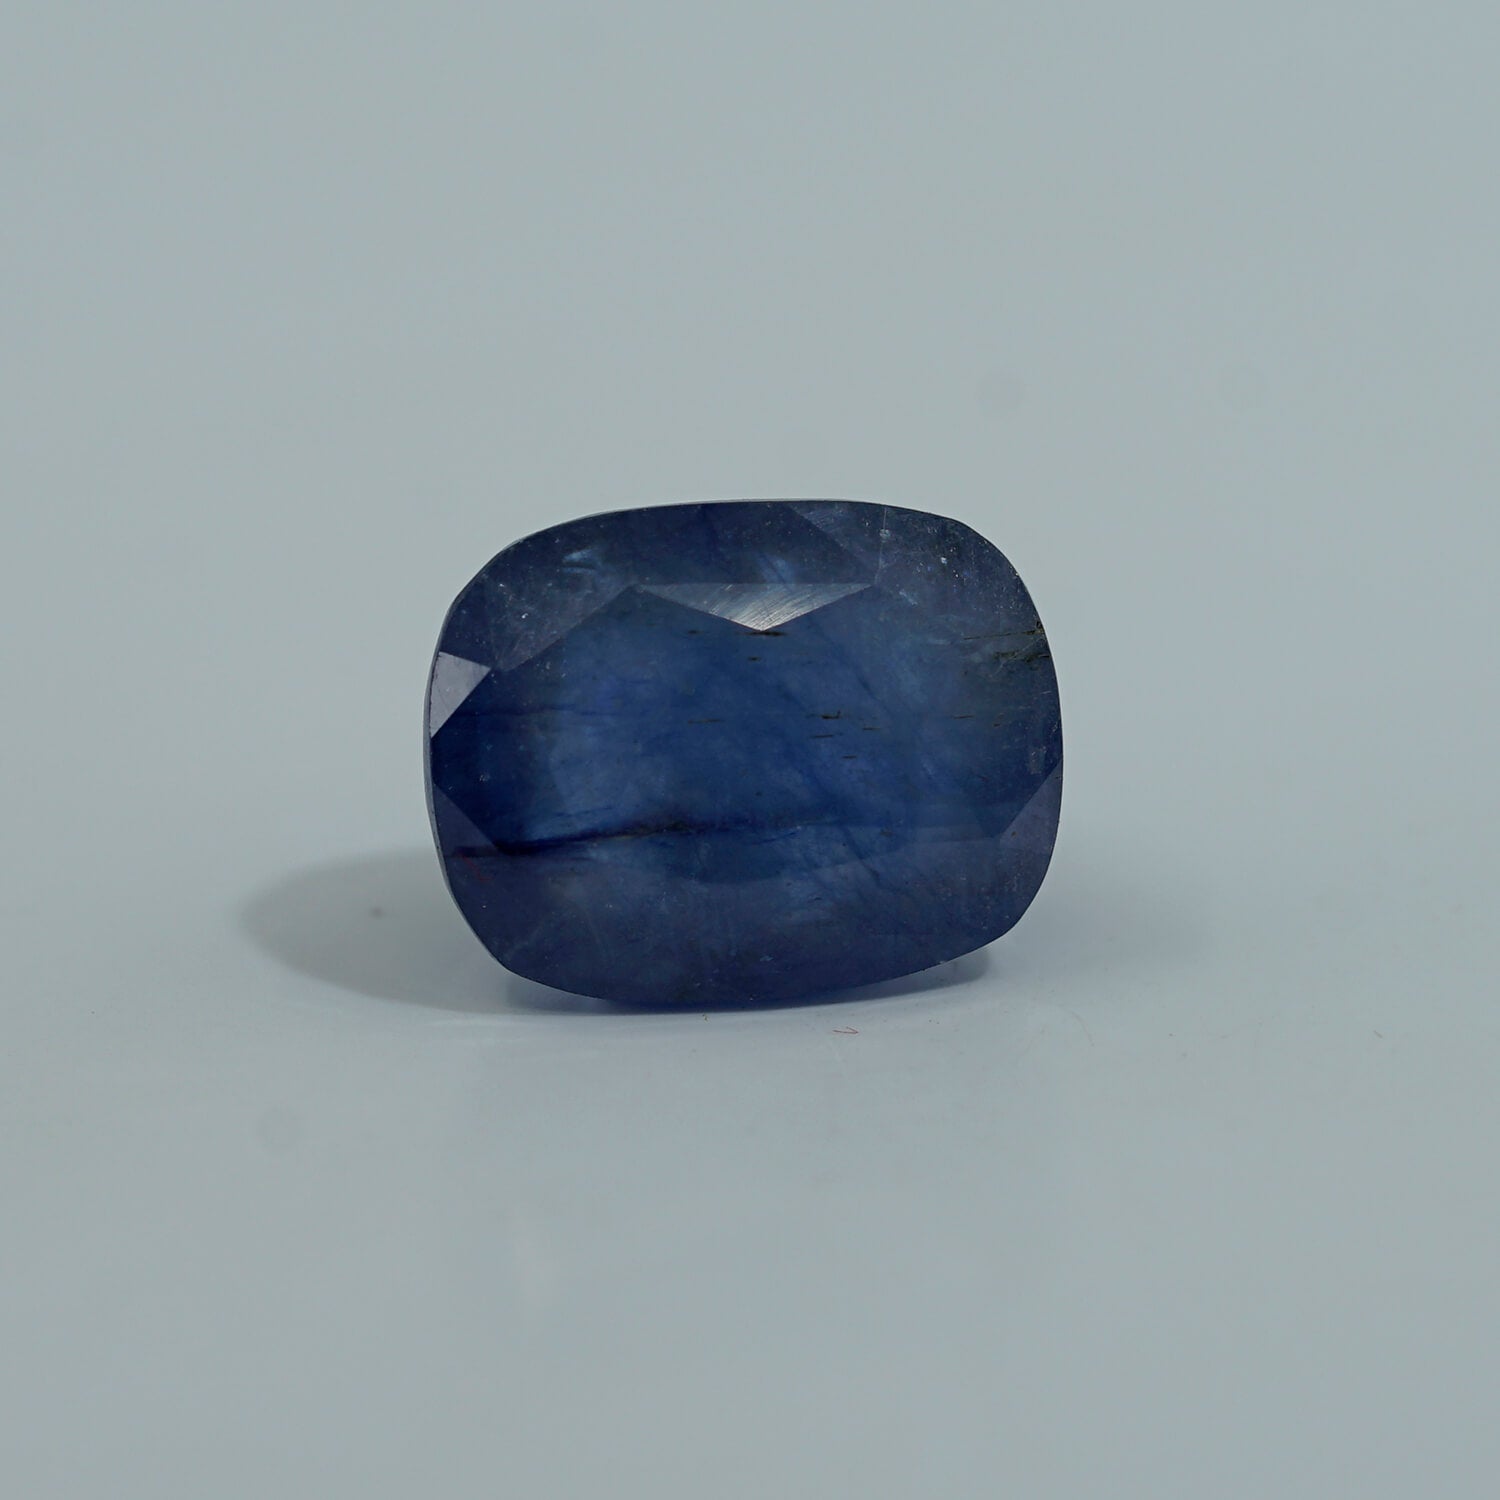 Vedic Crystals Blue sapphire gemstone (neelam nag) stone 6 ratti best price image 4230